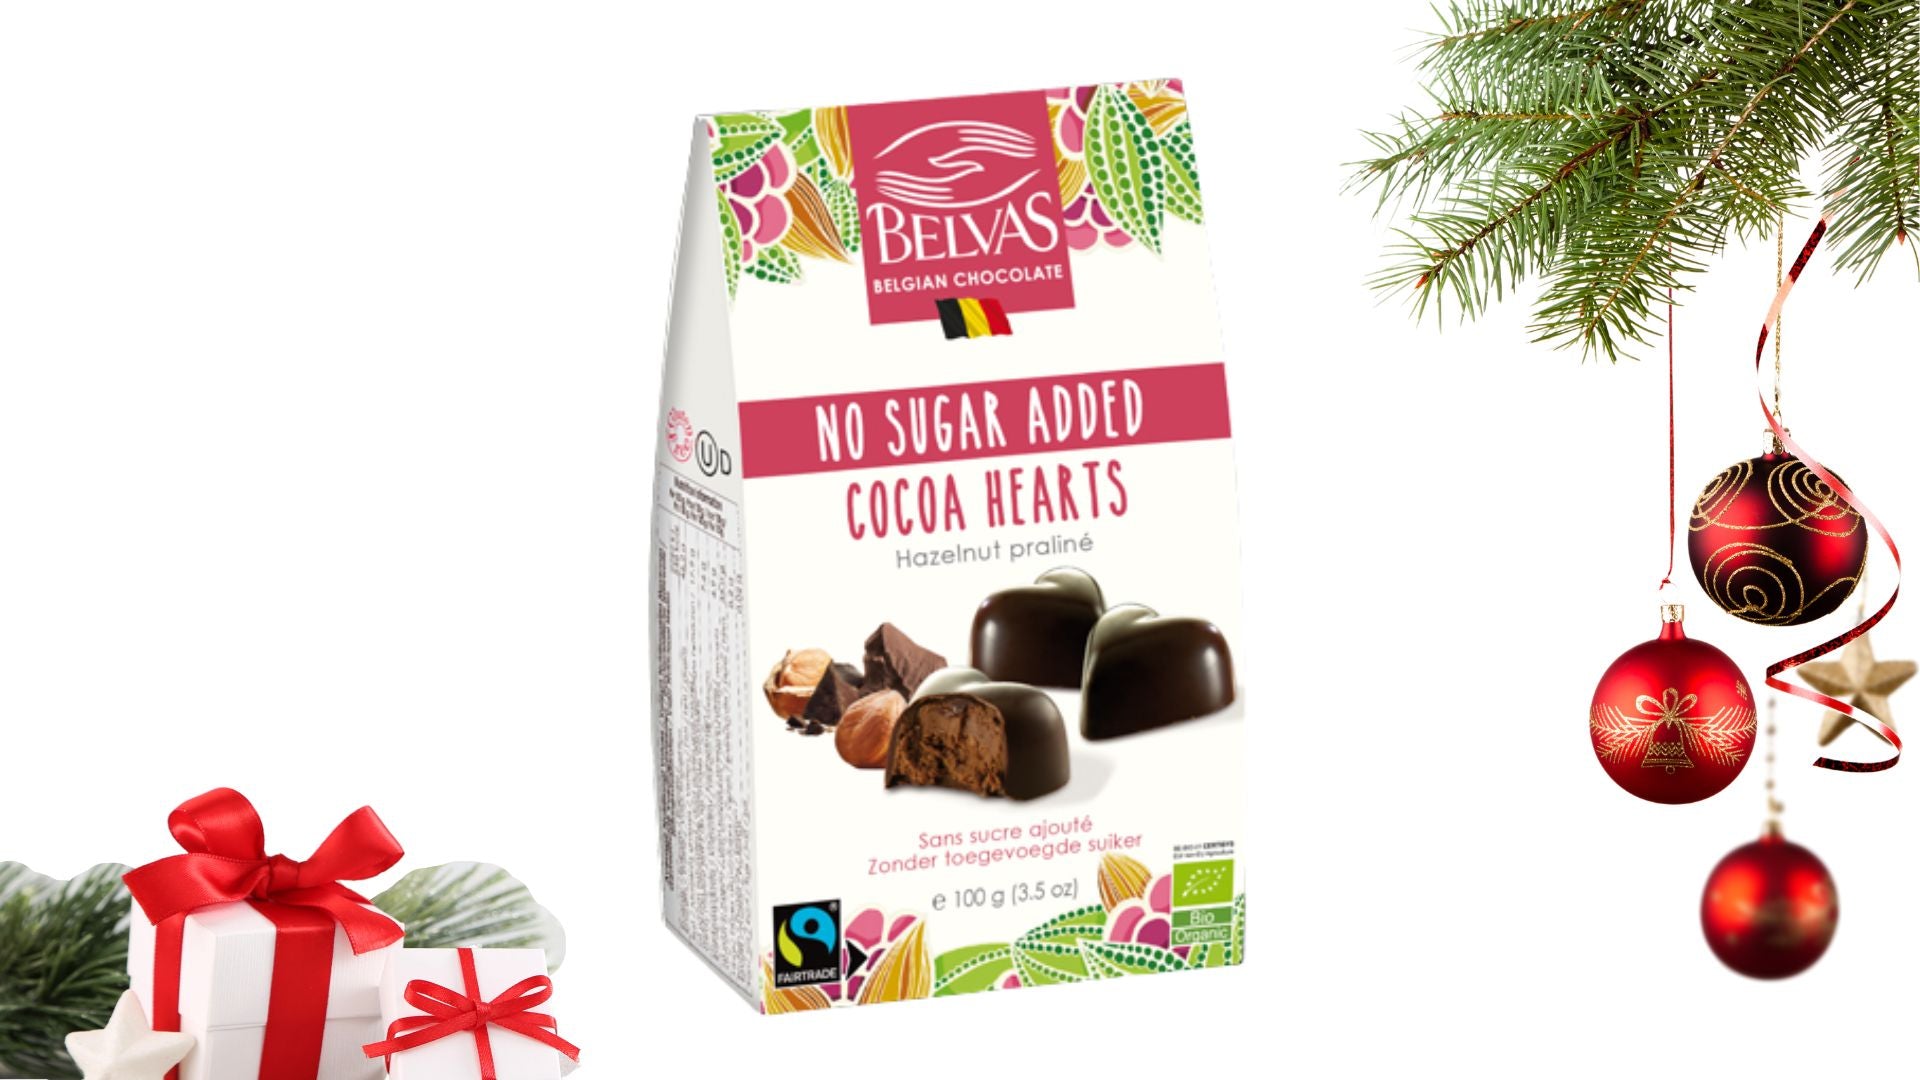 Belvas Cocoa Hearts Hazelnut Praline 100g